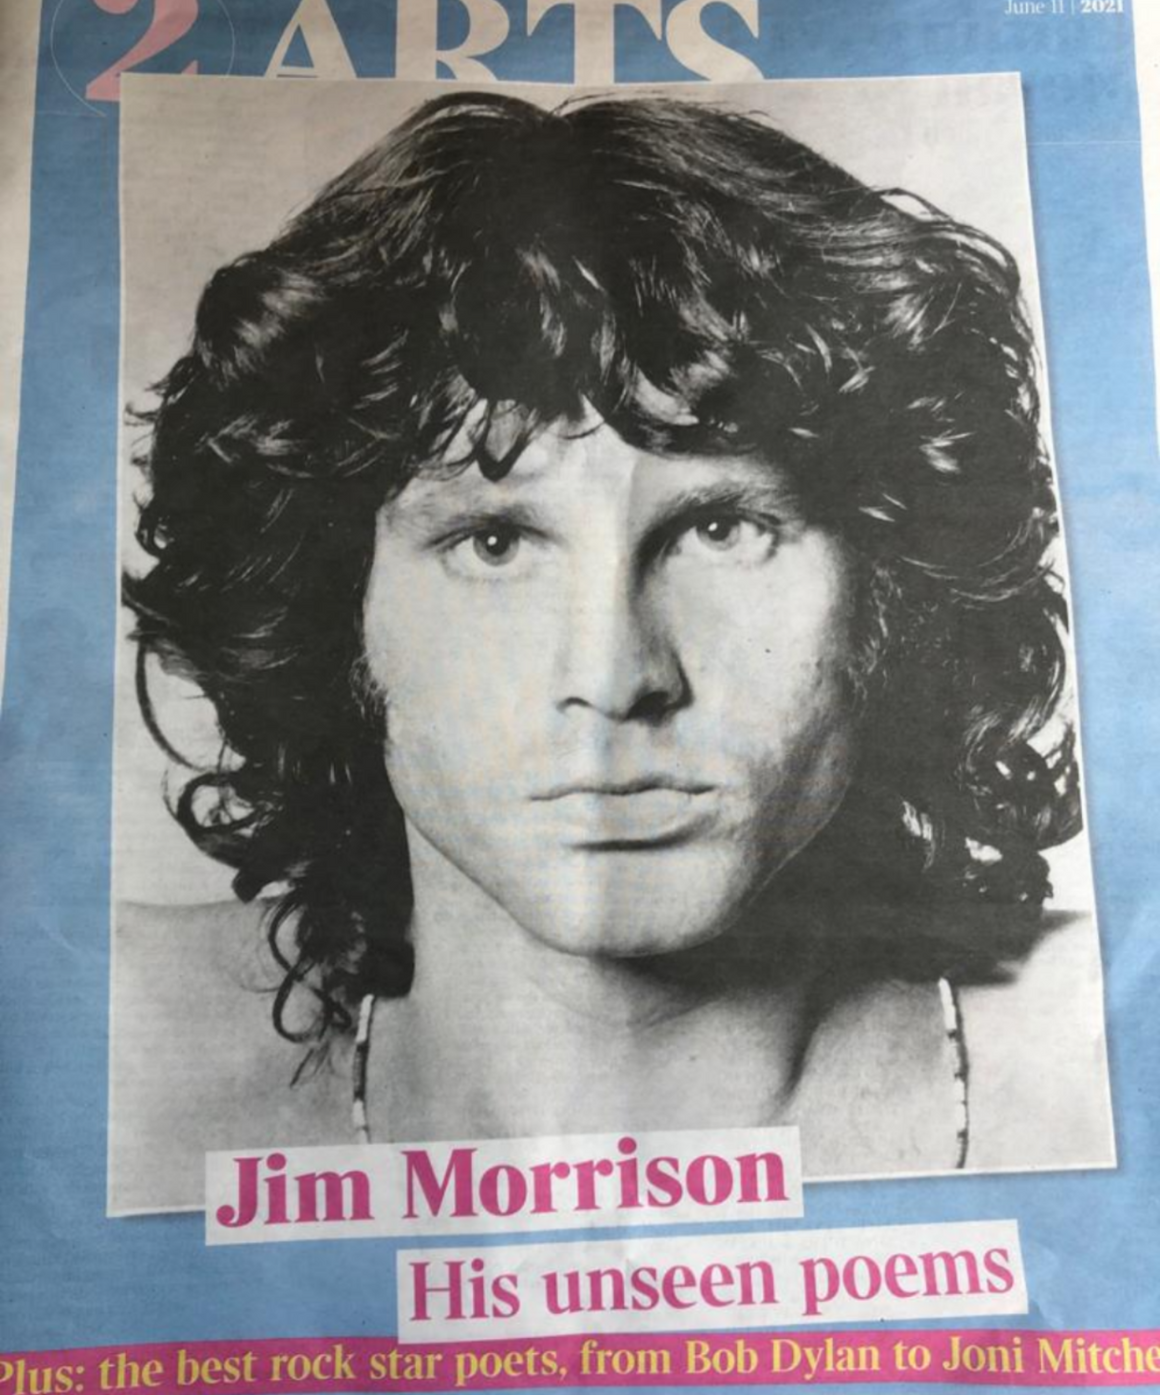 UK Times 2 Arts Supplement June 2021 The Doors Jim Morrison